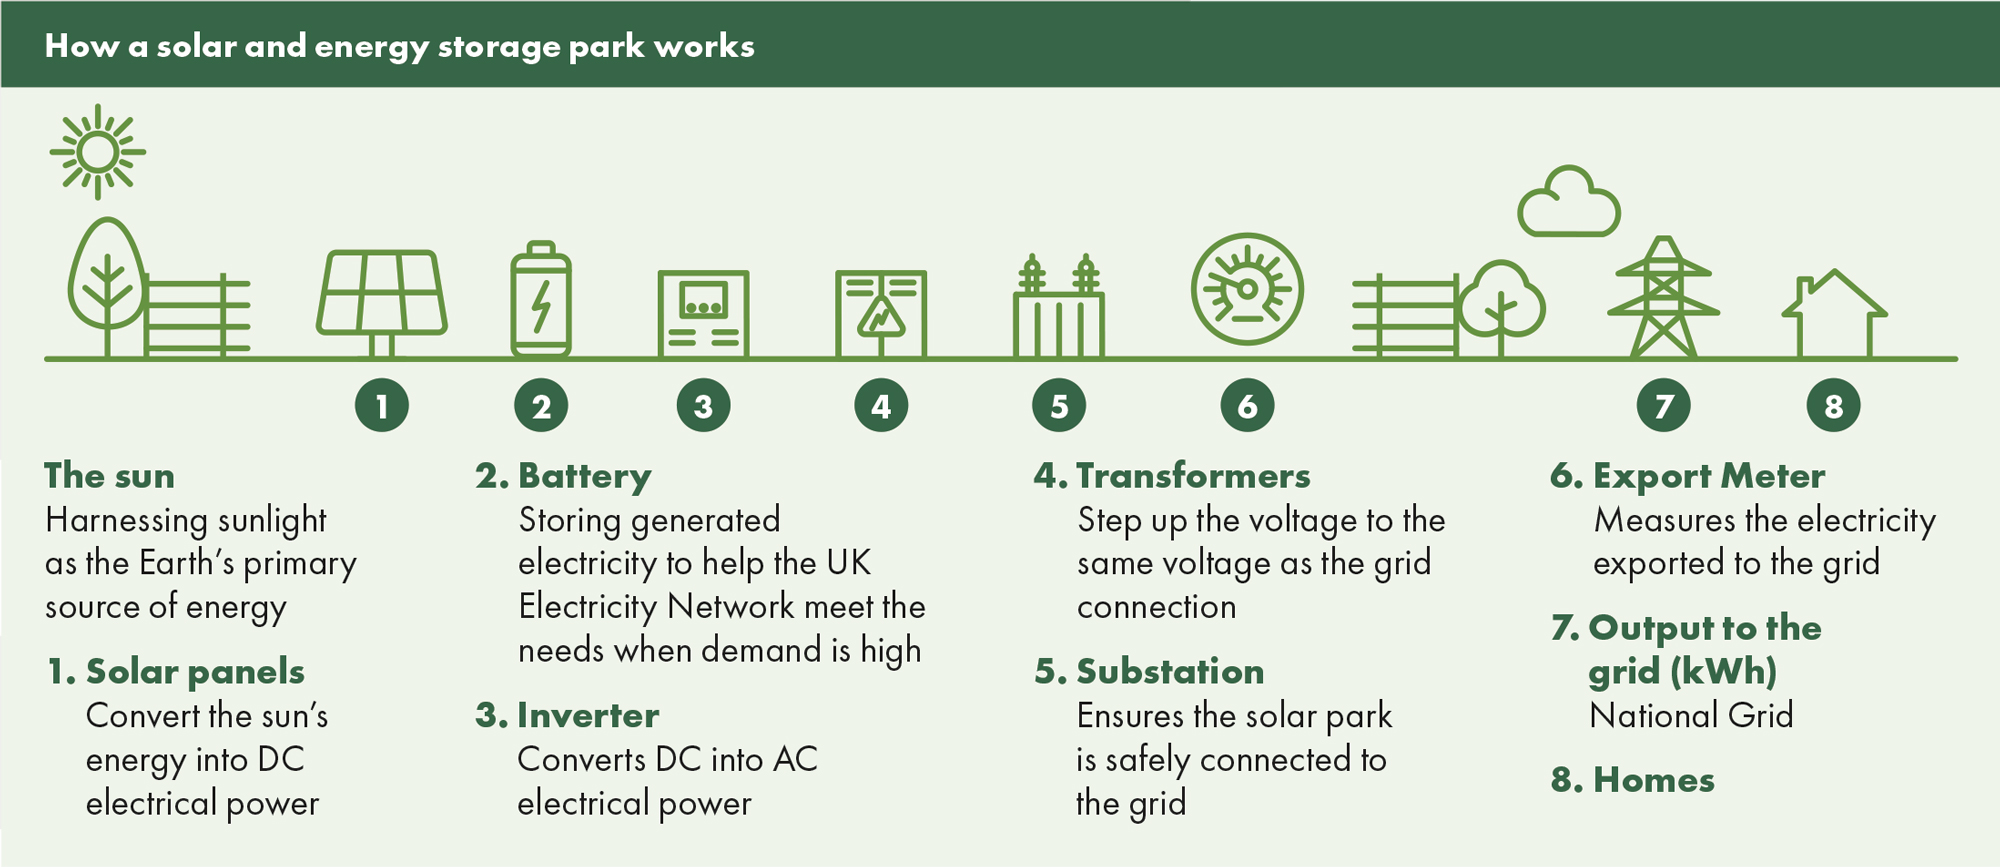 How a solar and energy storgae park works